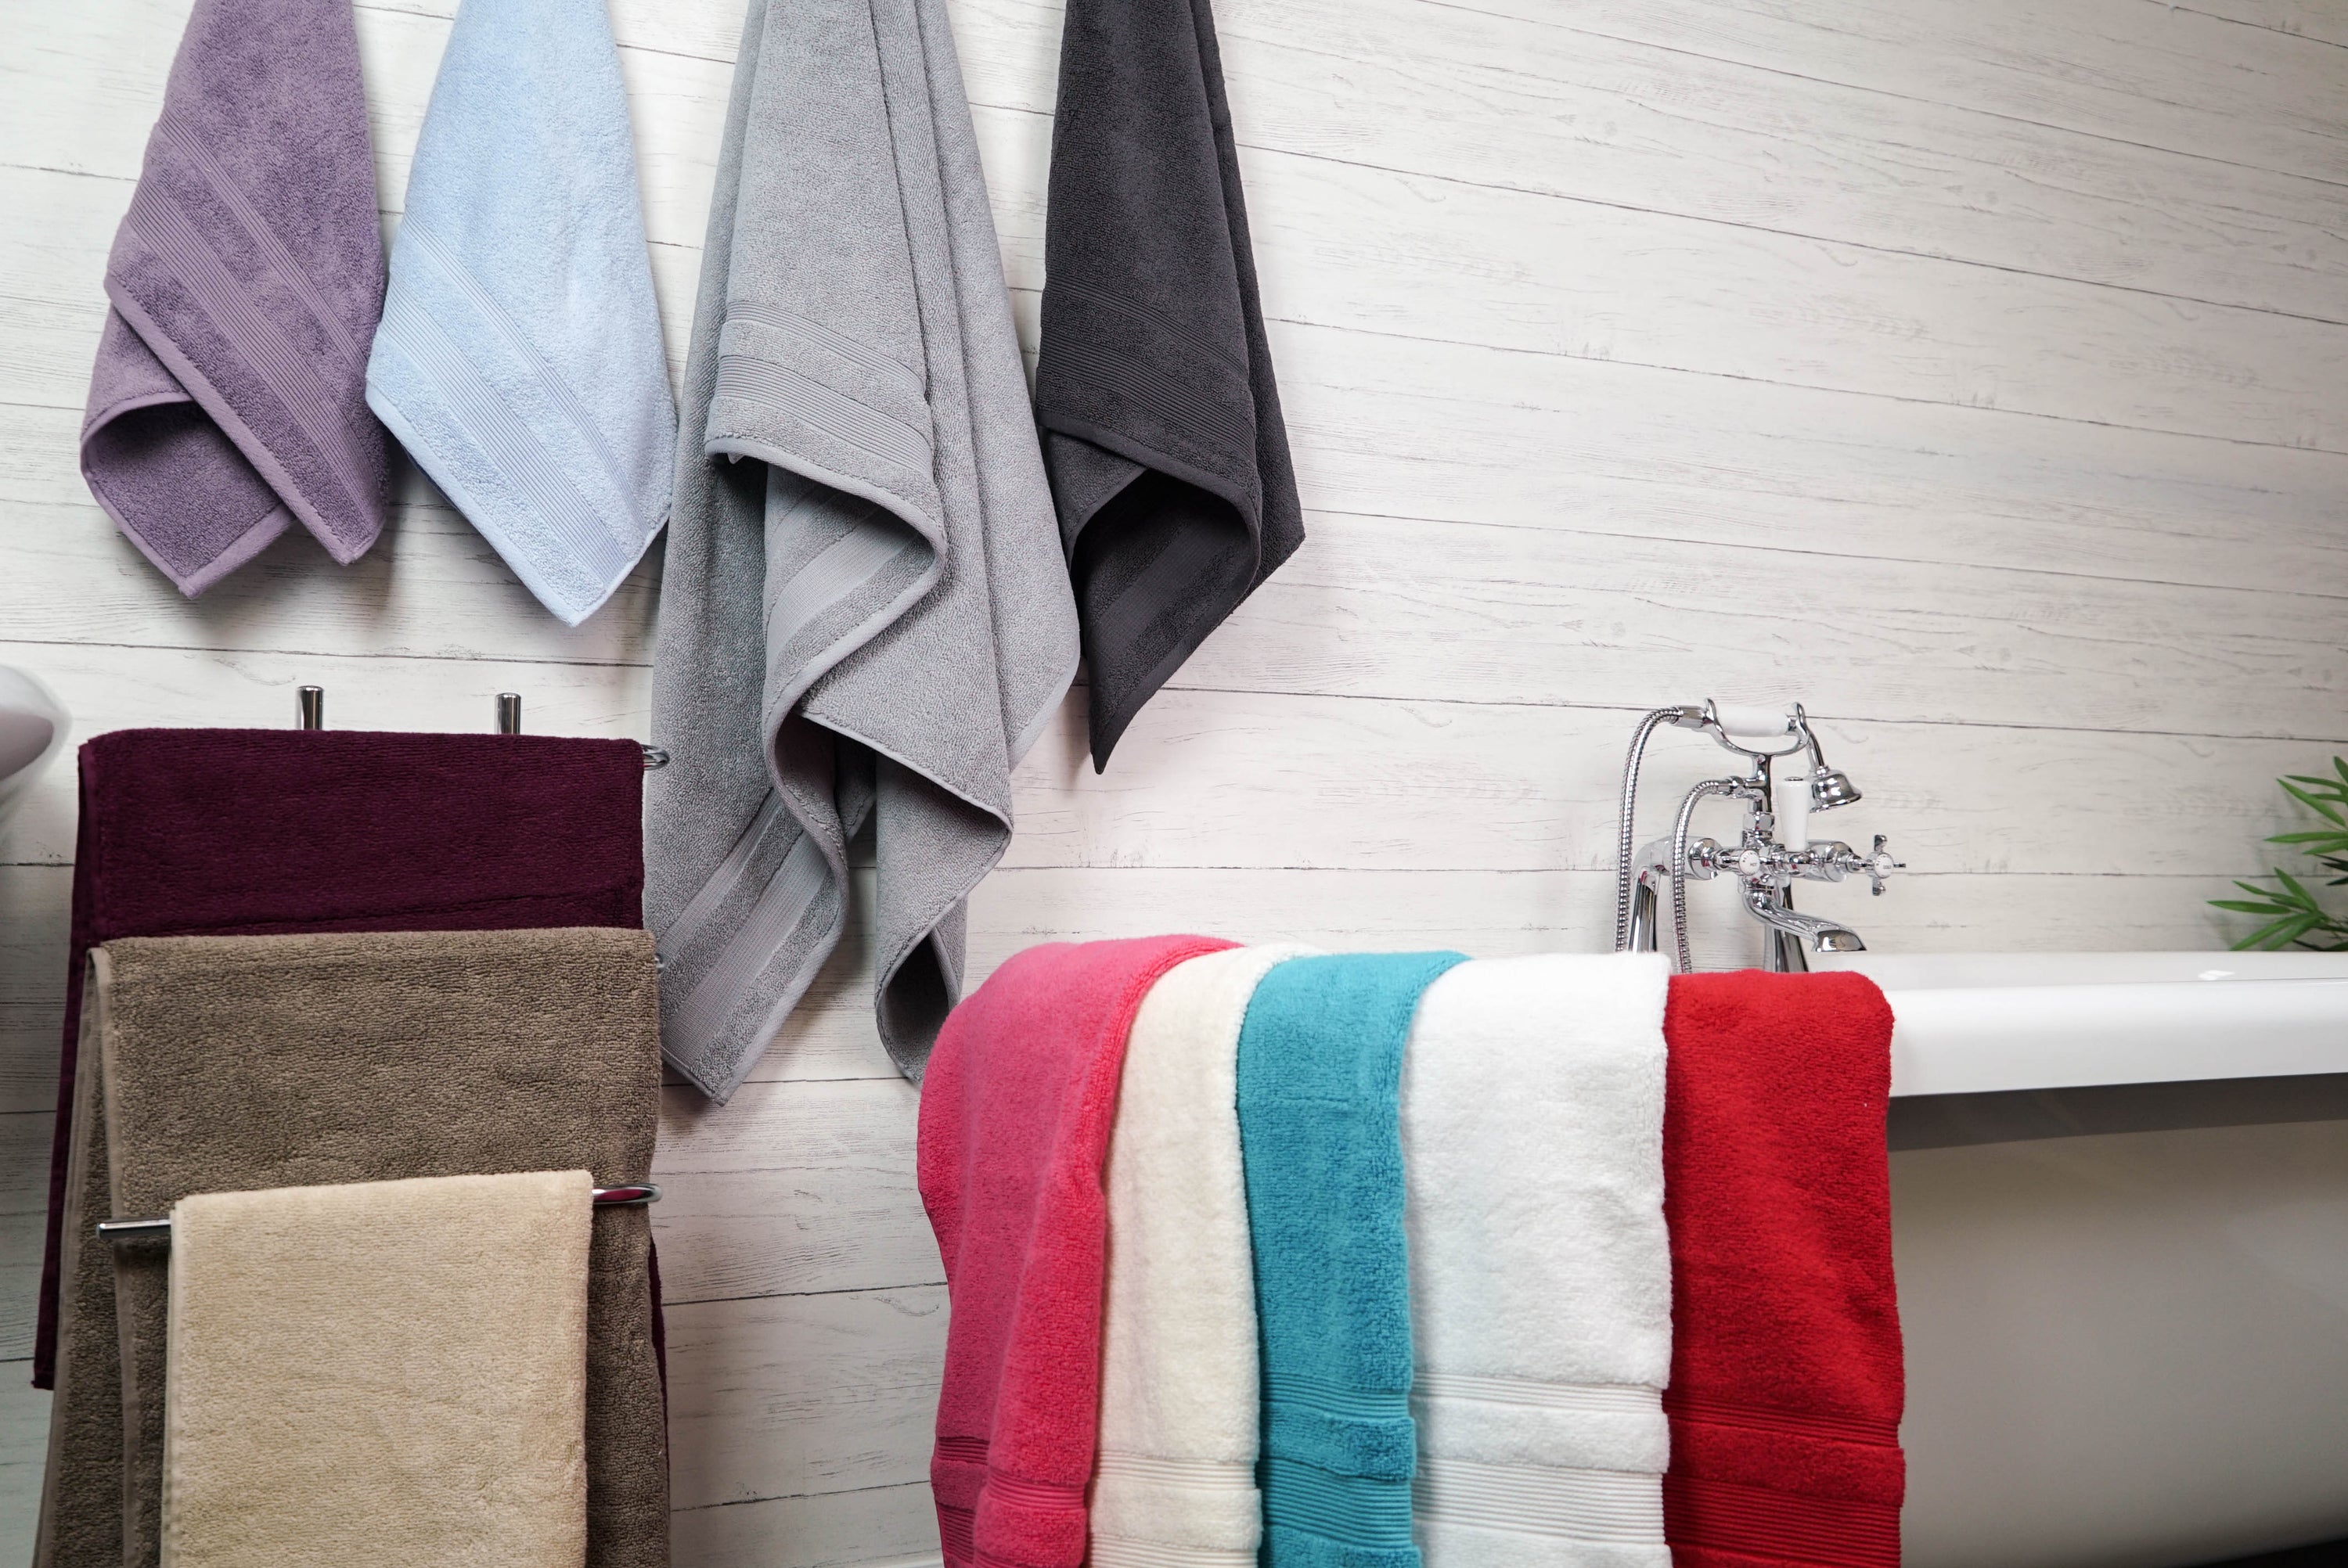 Bath Towel vs. Bath Sheet: How Do They Compare?